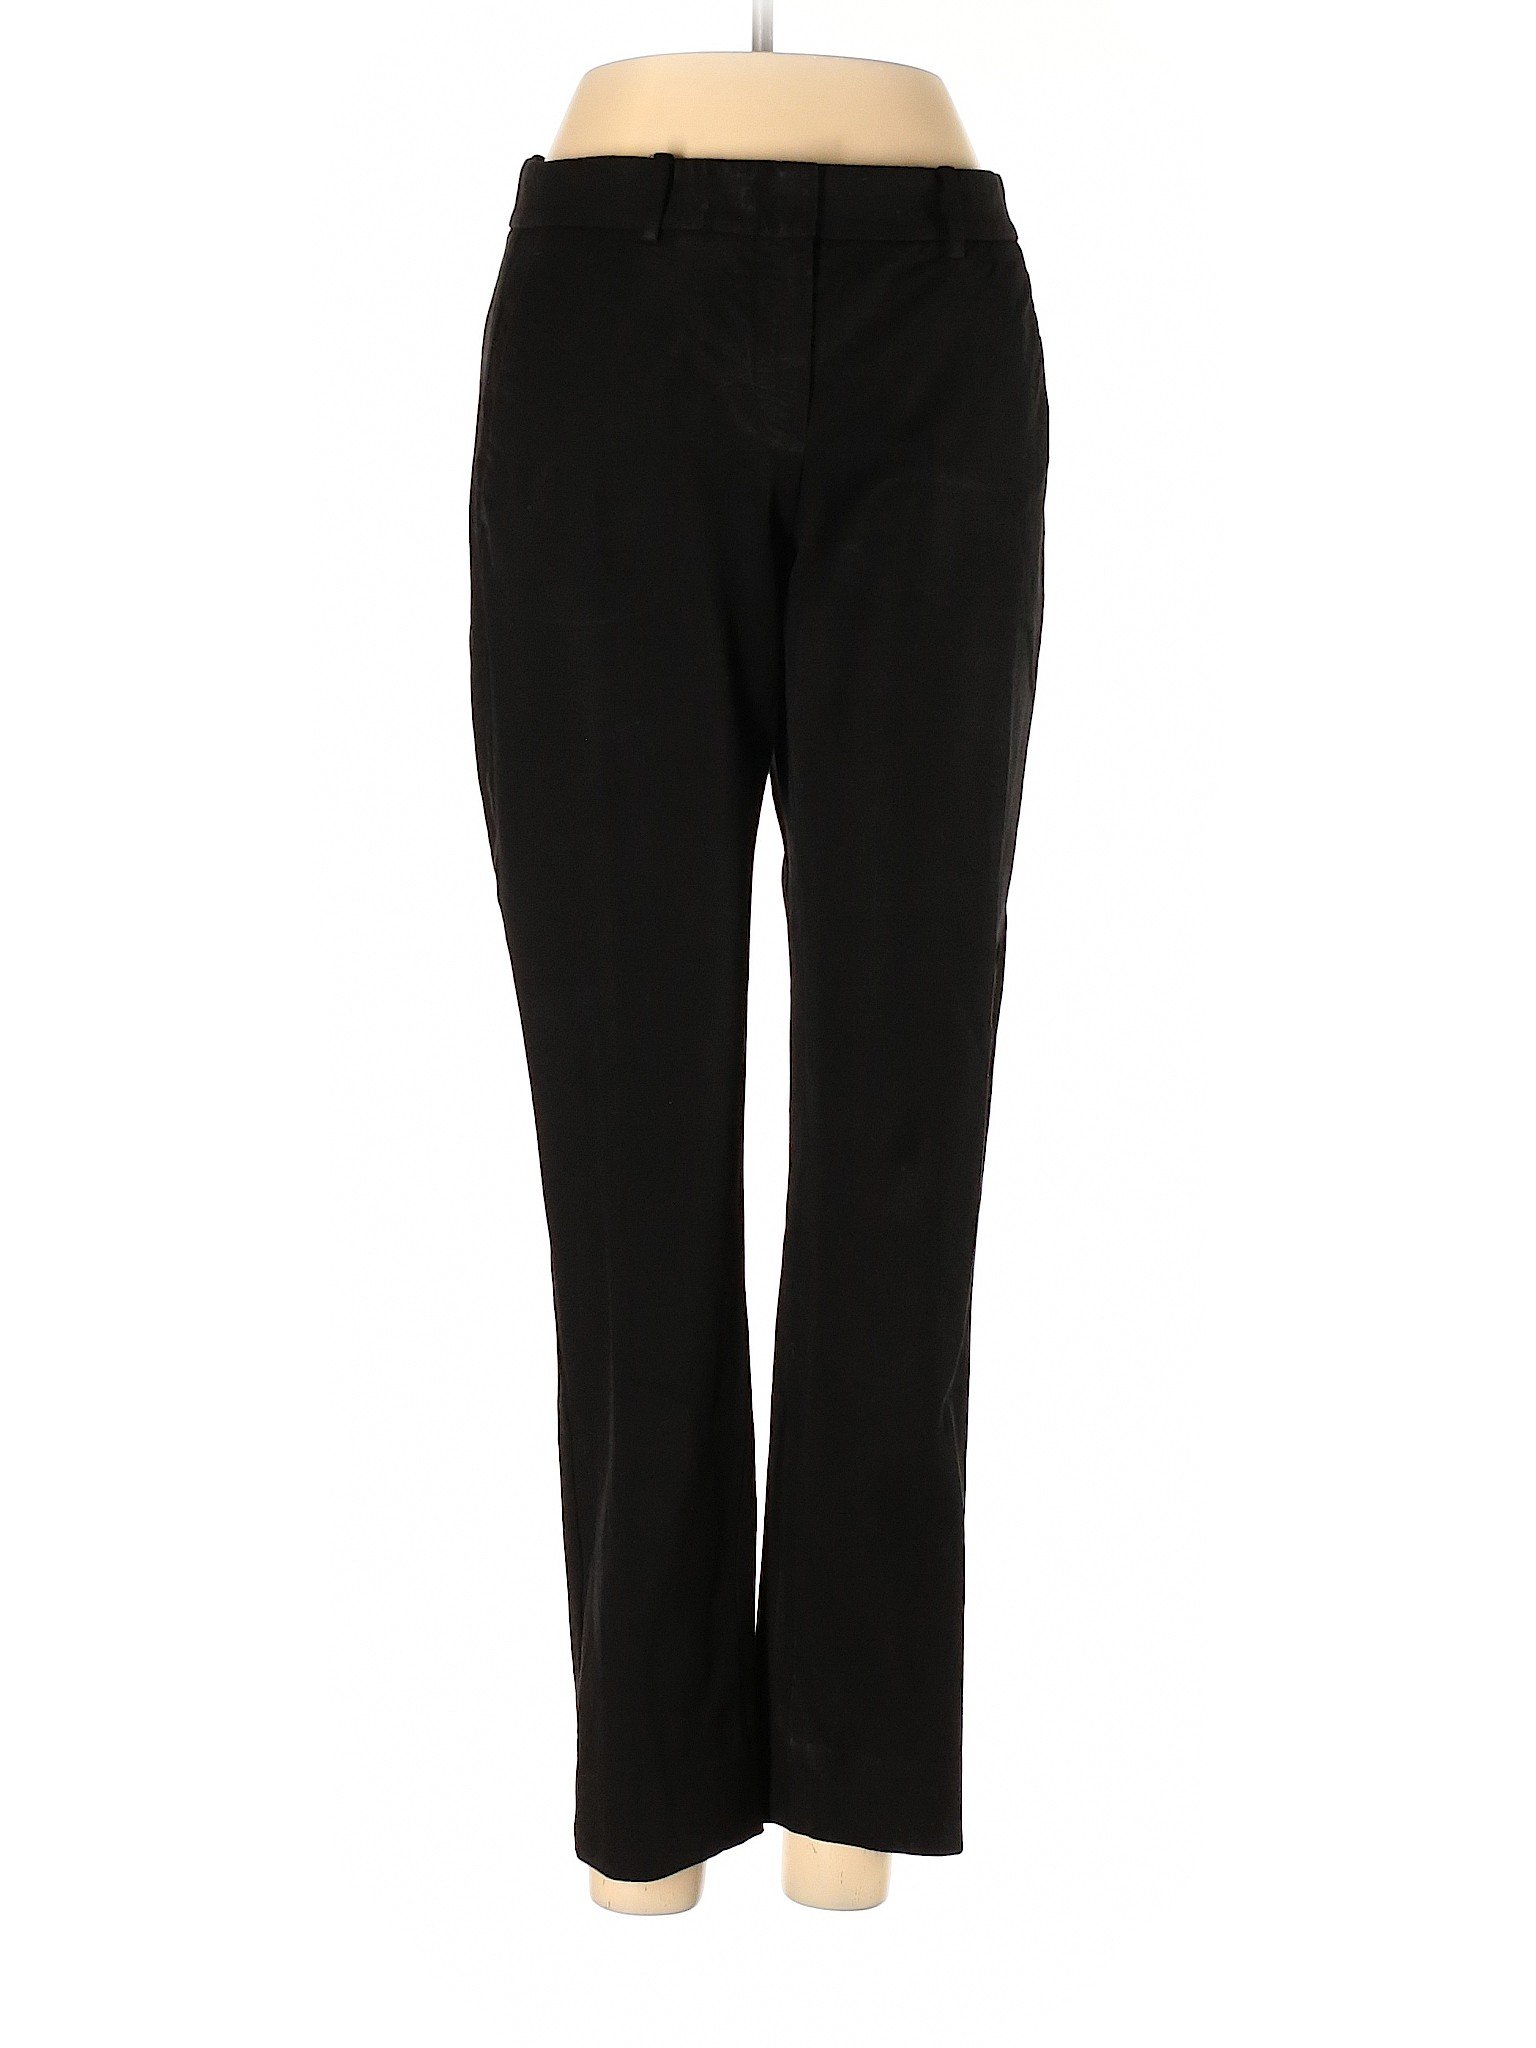 Theory Women Black Dress Pants 2 | eBay